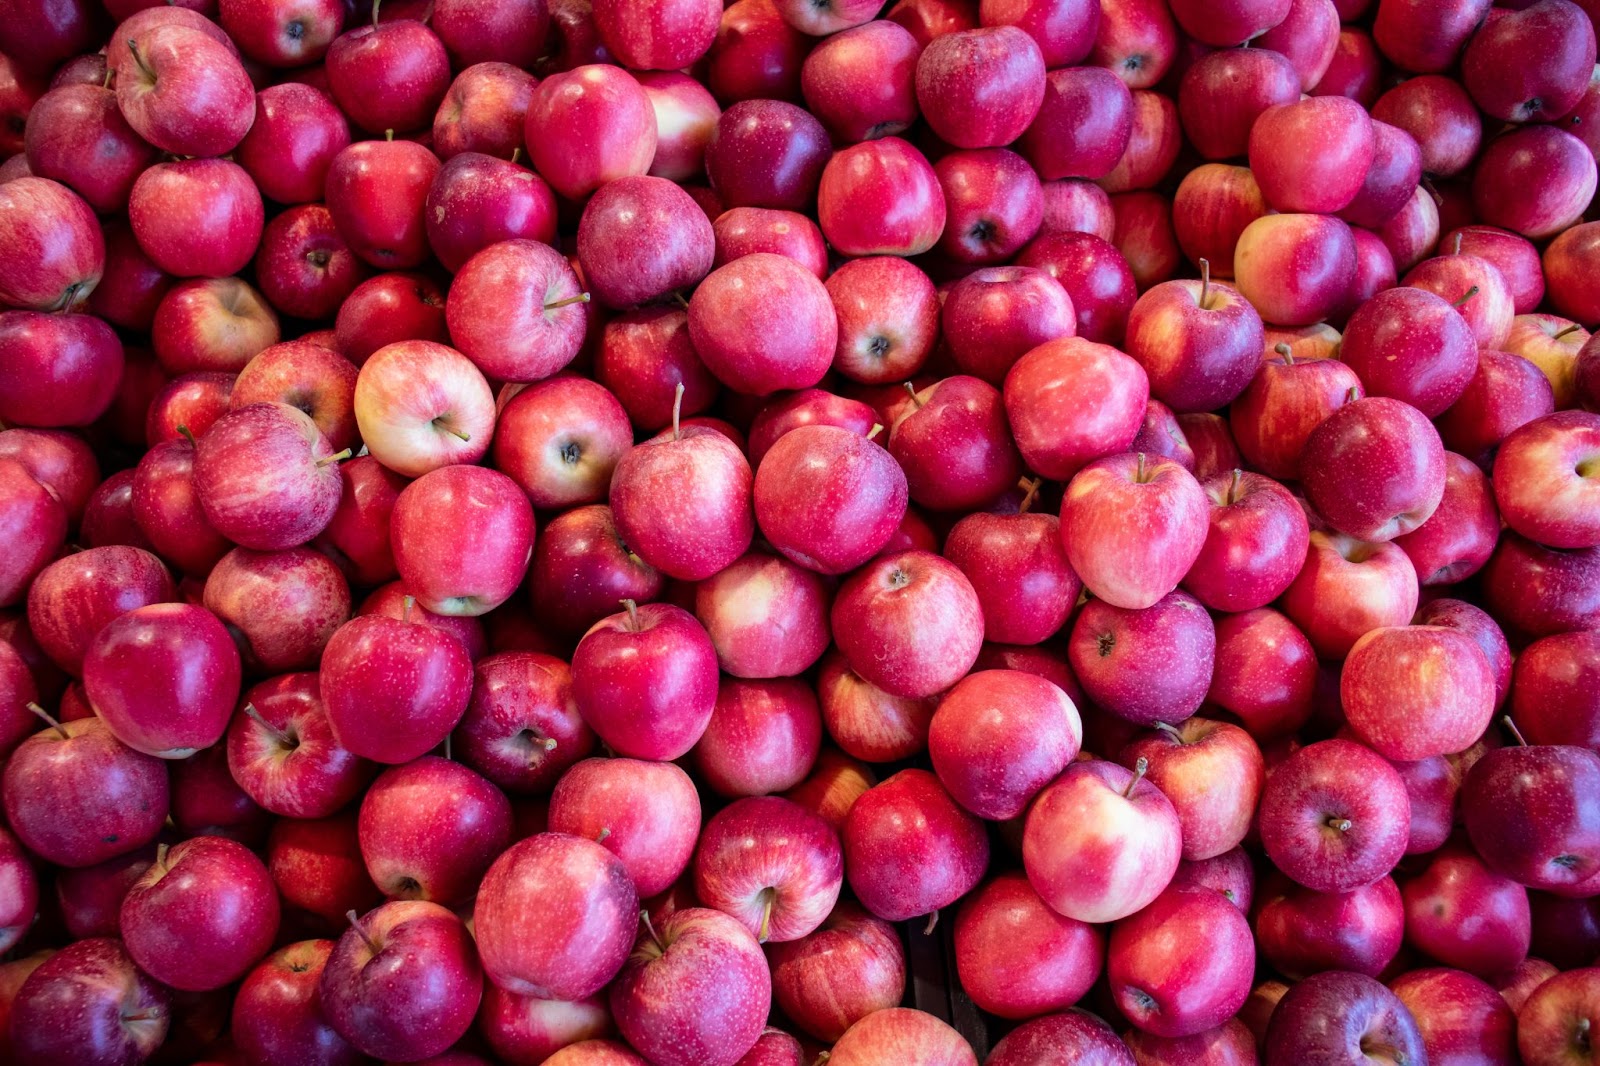 Ambrosia Apples vs Fuji: Which Variety Reigns Supreme?